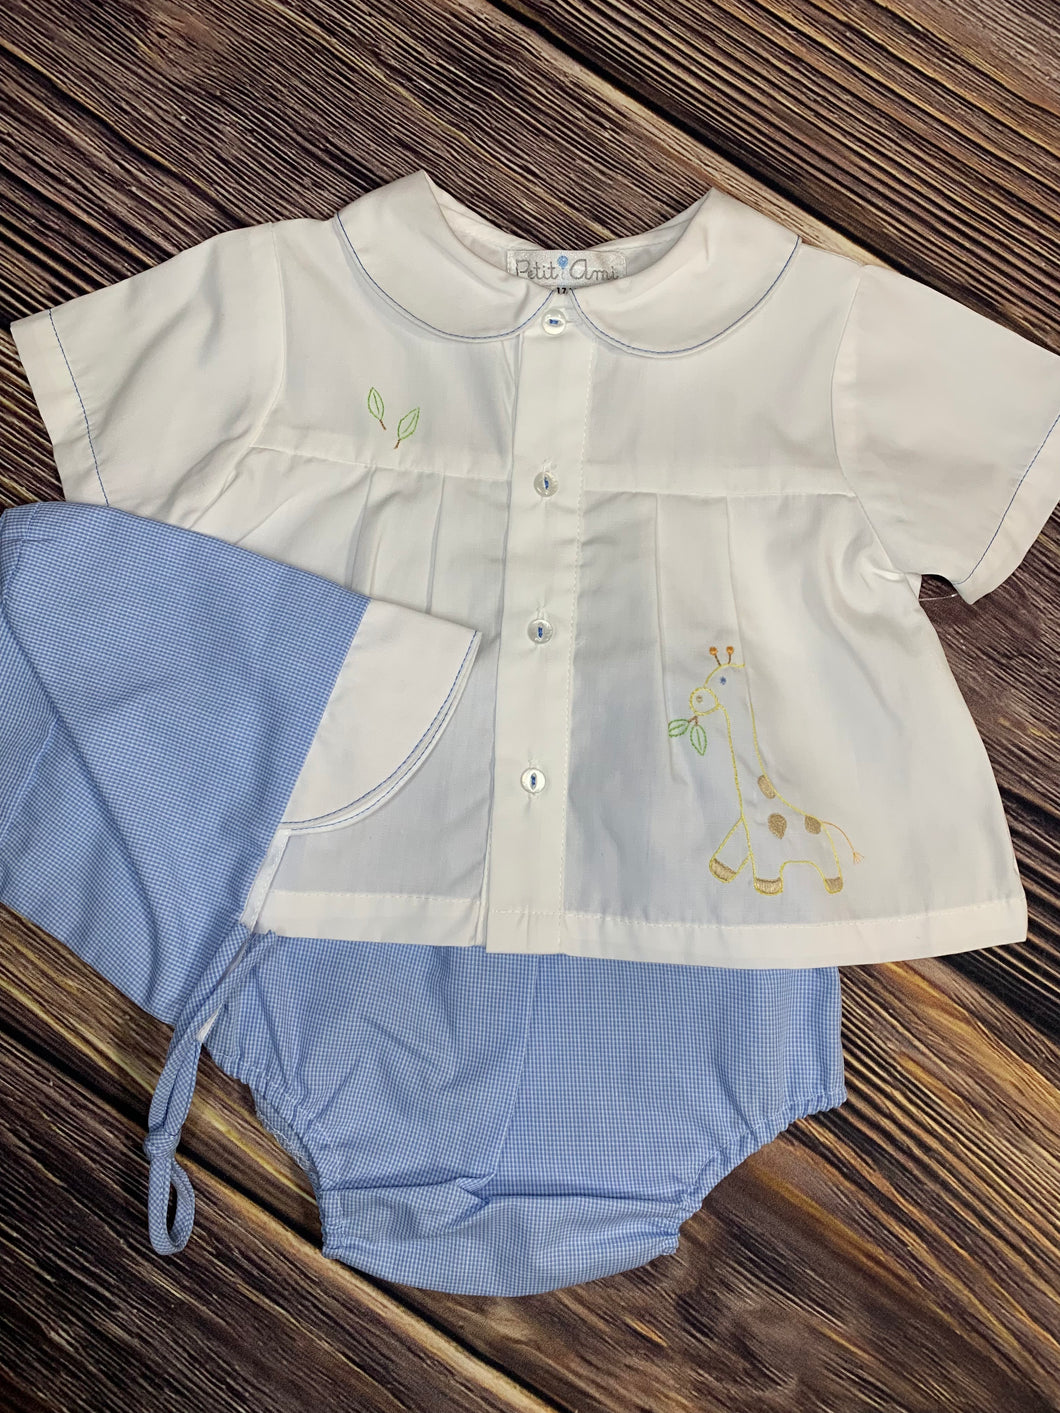 Petit Ami Diaper Set With Safari Embroidery, Blue